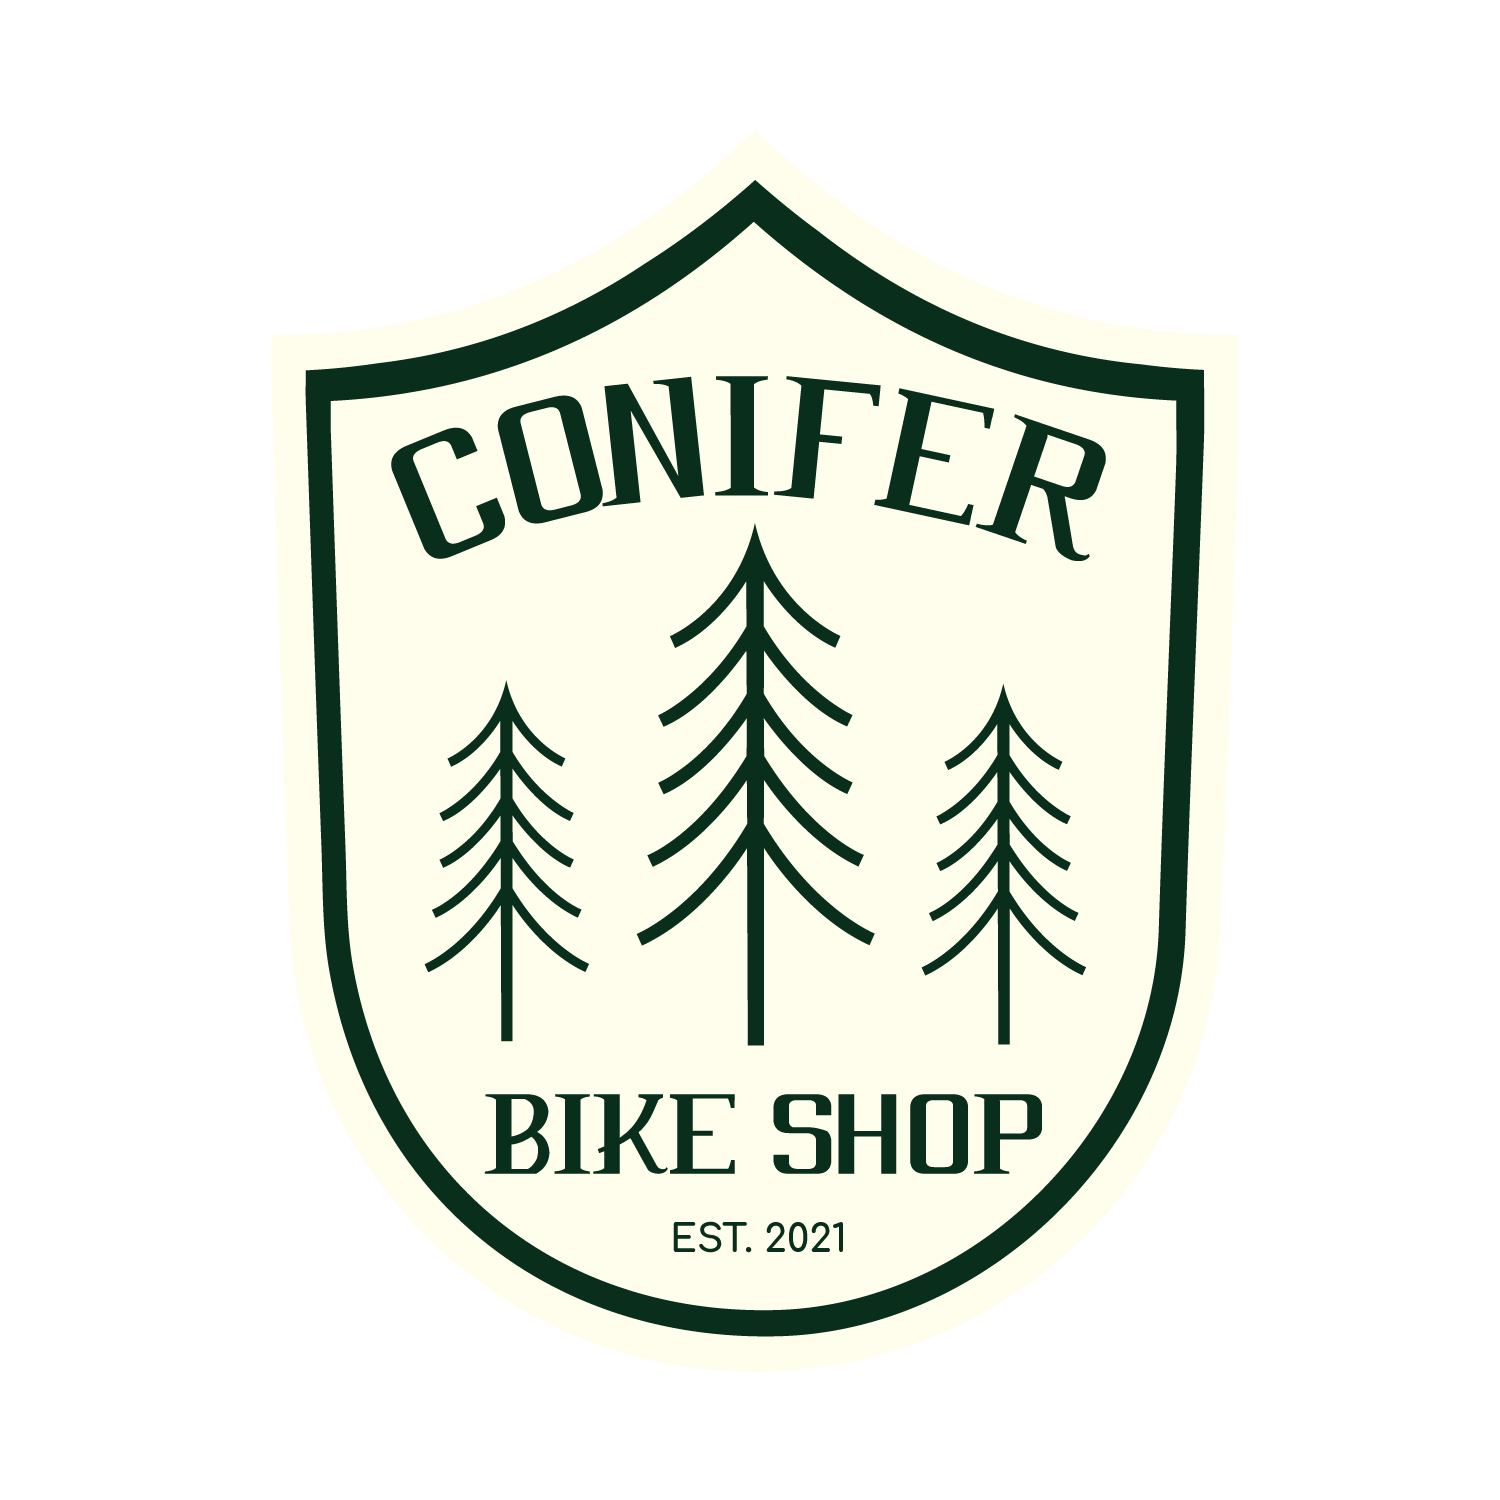 Conifer Bike Shop